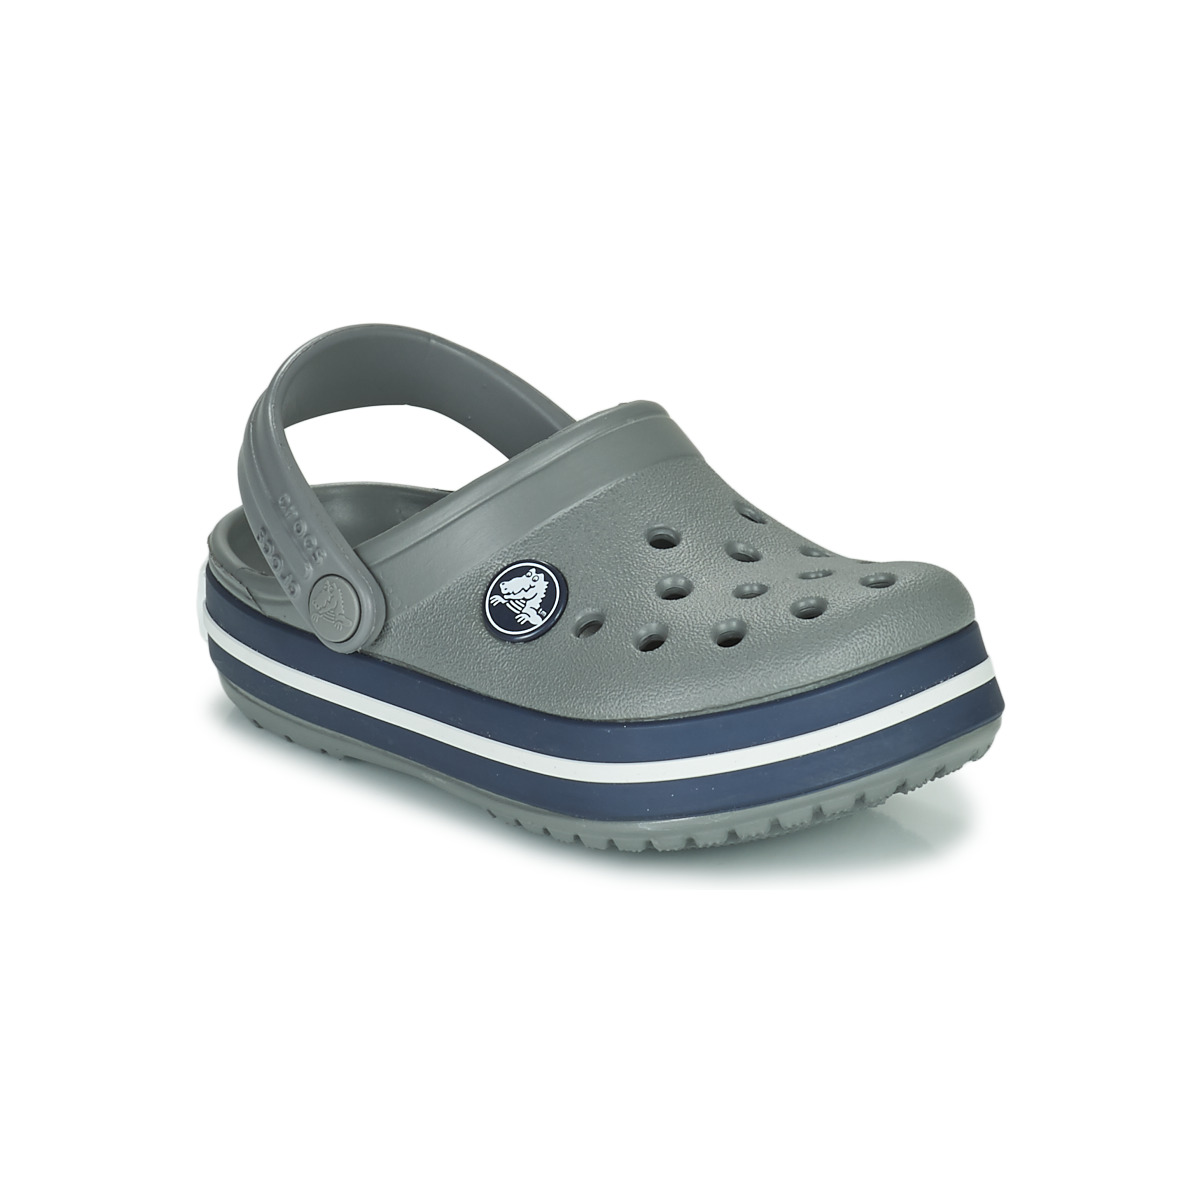 Schuhe Kinder Pantoletten / Clogs Crocs CROCBAND CLOG T Grau / Marineblau